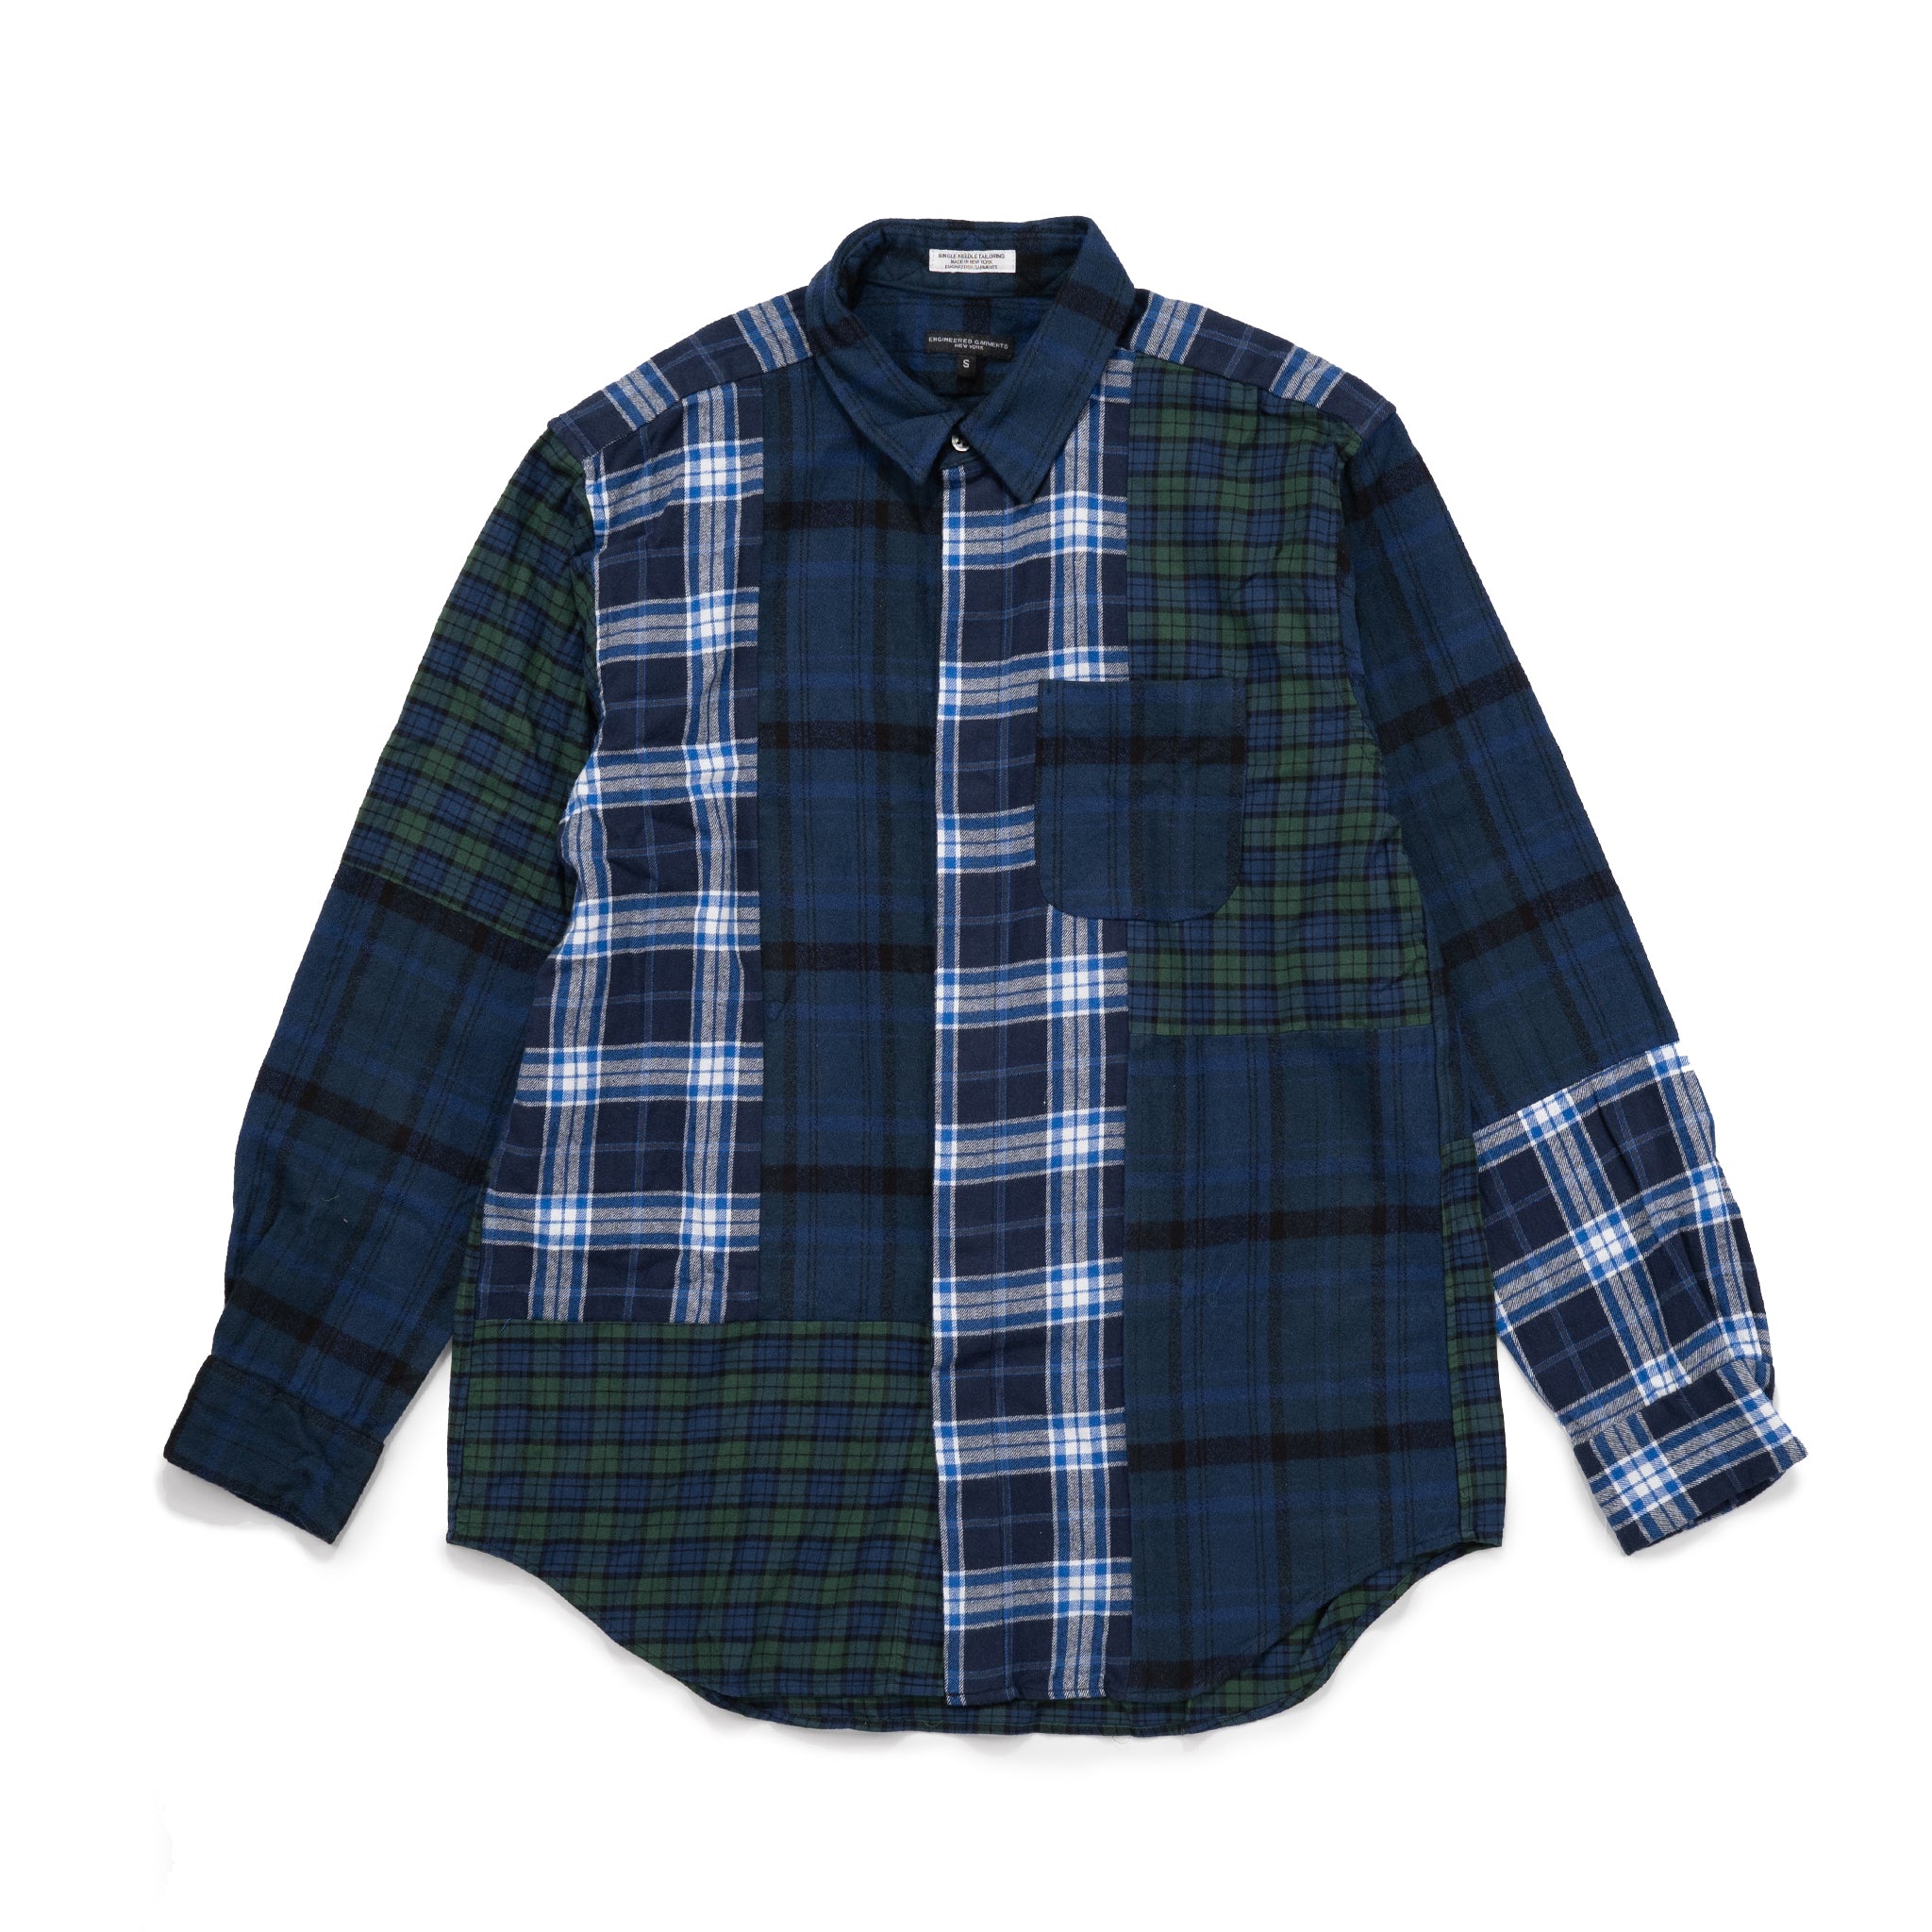 Combo Short Collar Shirt 22F1A017 Navy Plaid Cotton Flannel